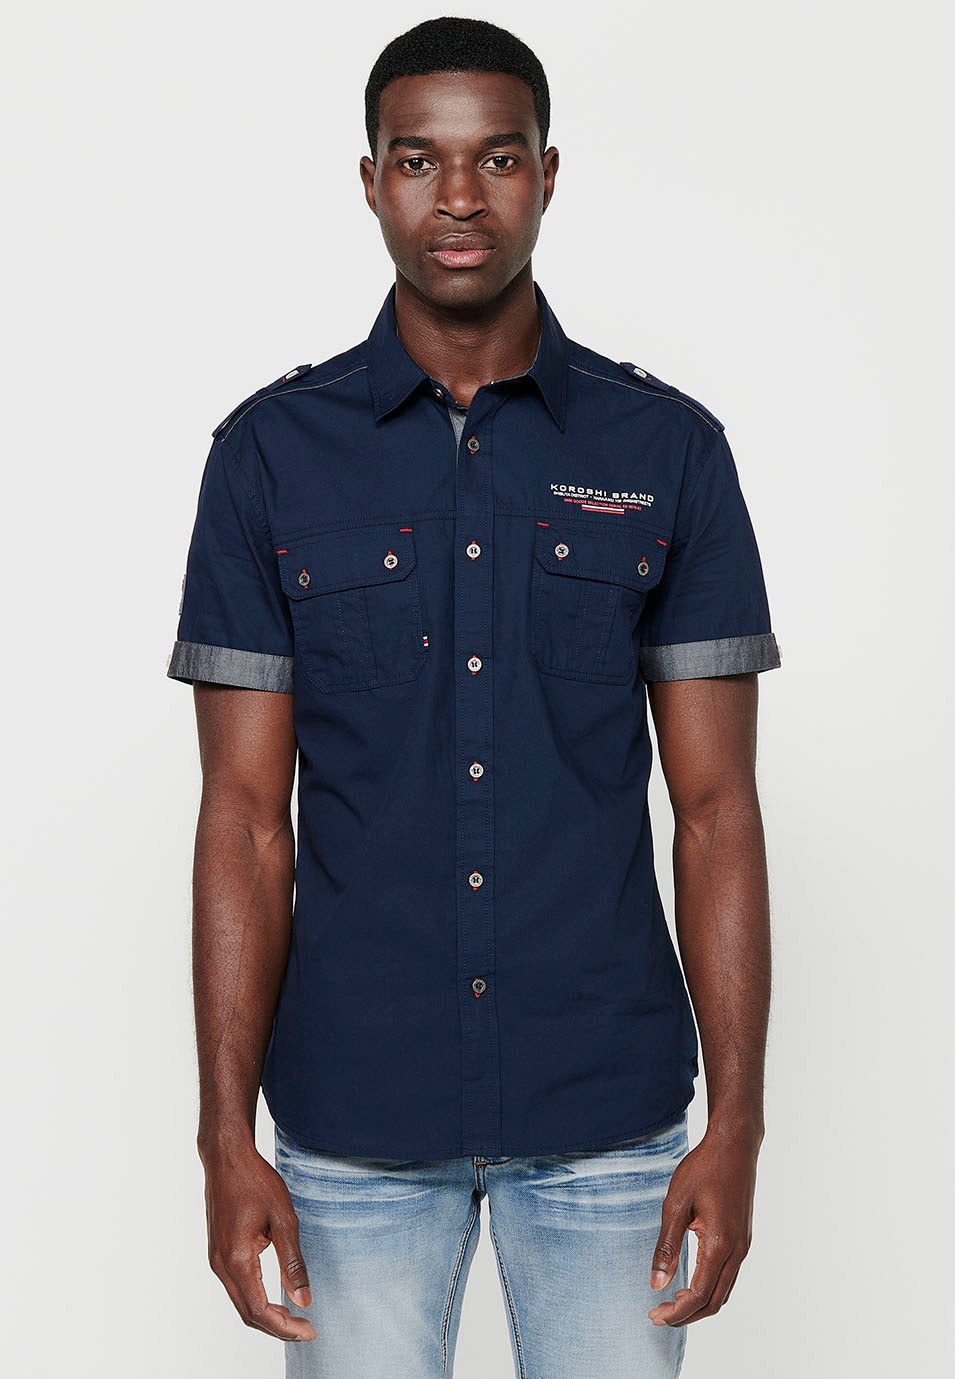 Camisa de algodon, manga corta, detalles hombro, color navy para hombre 2